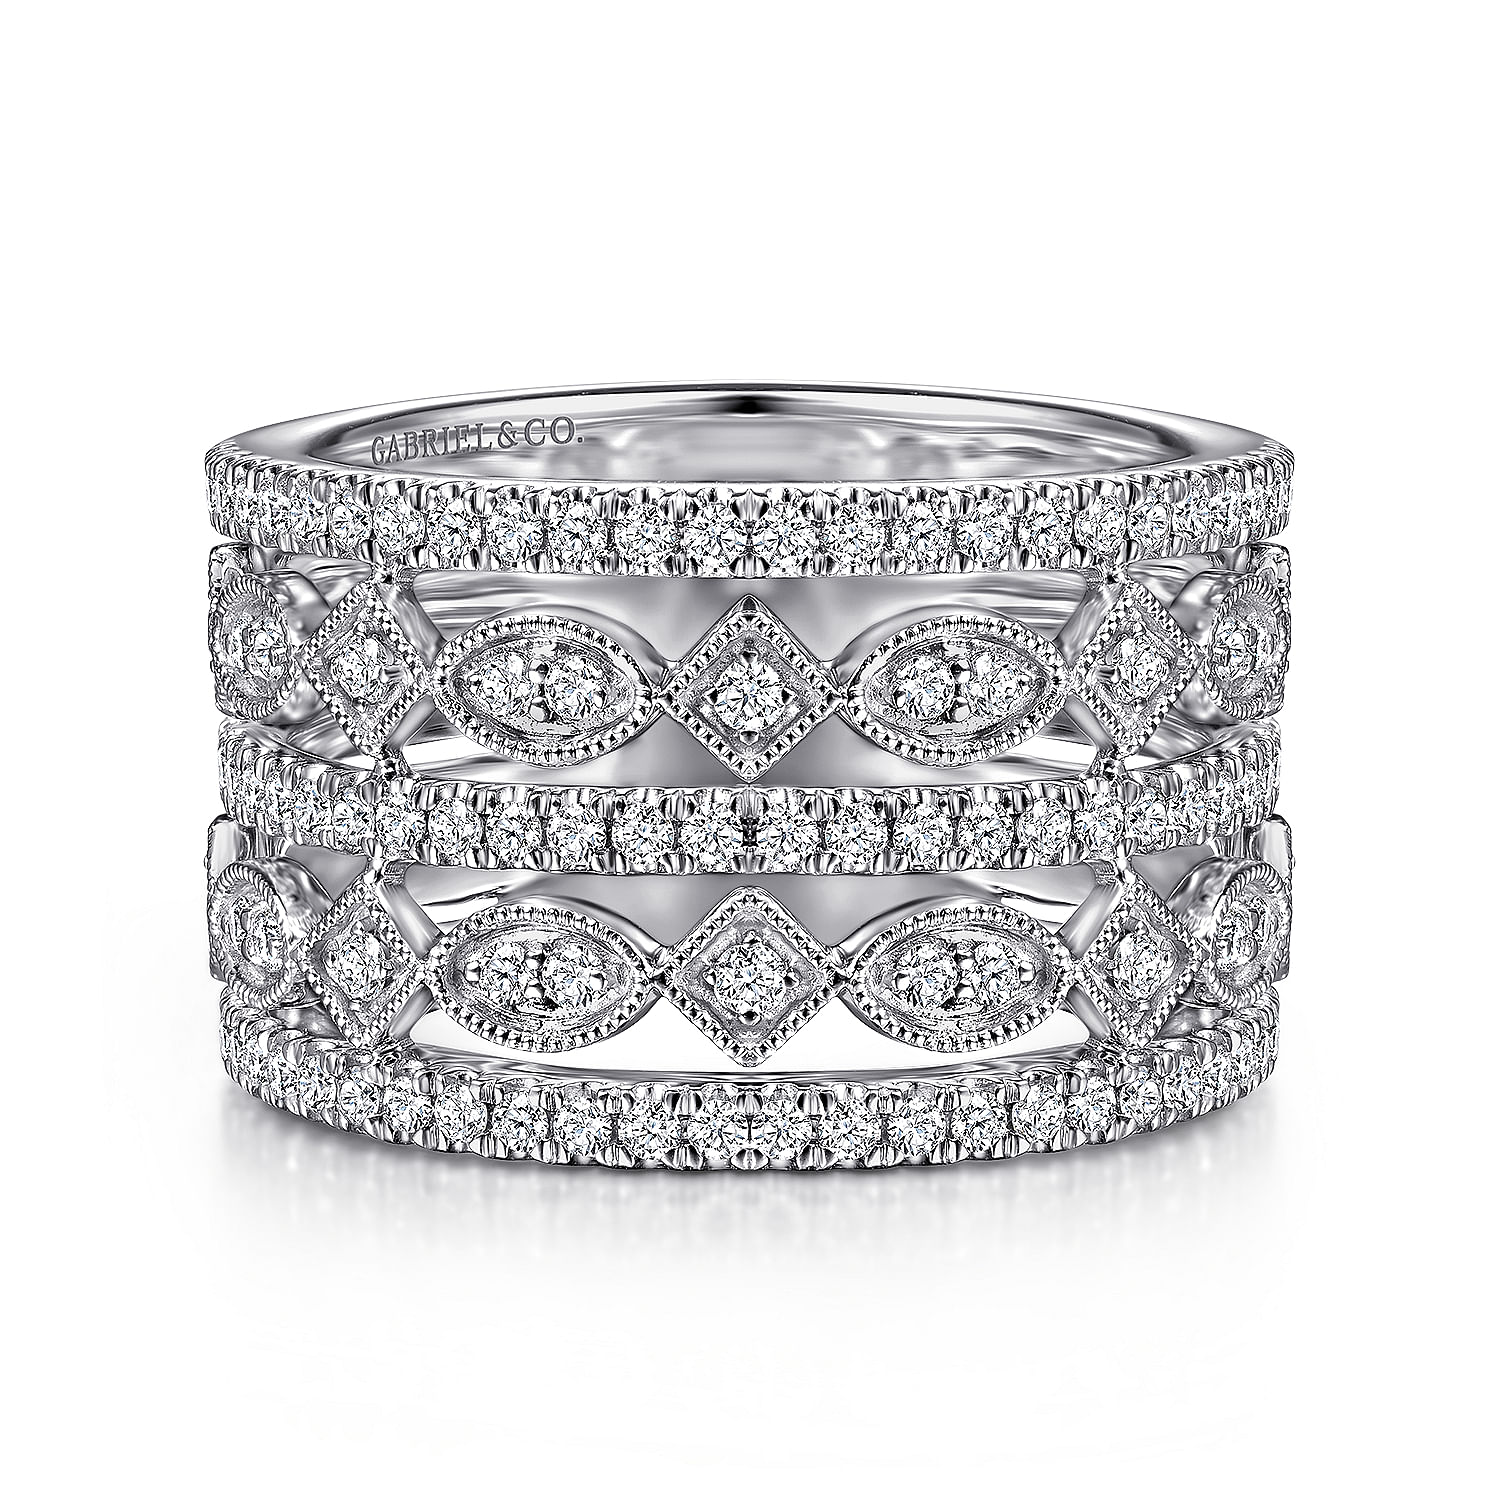 Wide Vintage Inspired 14K White Gold Diamond Ring